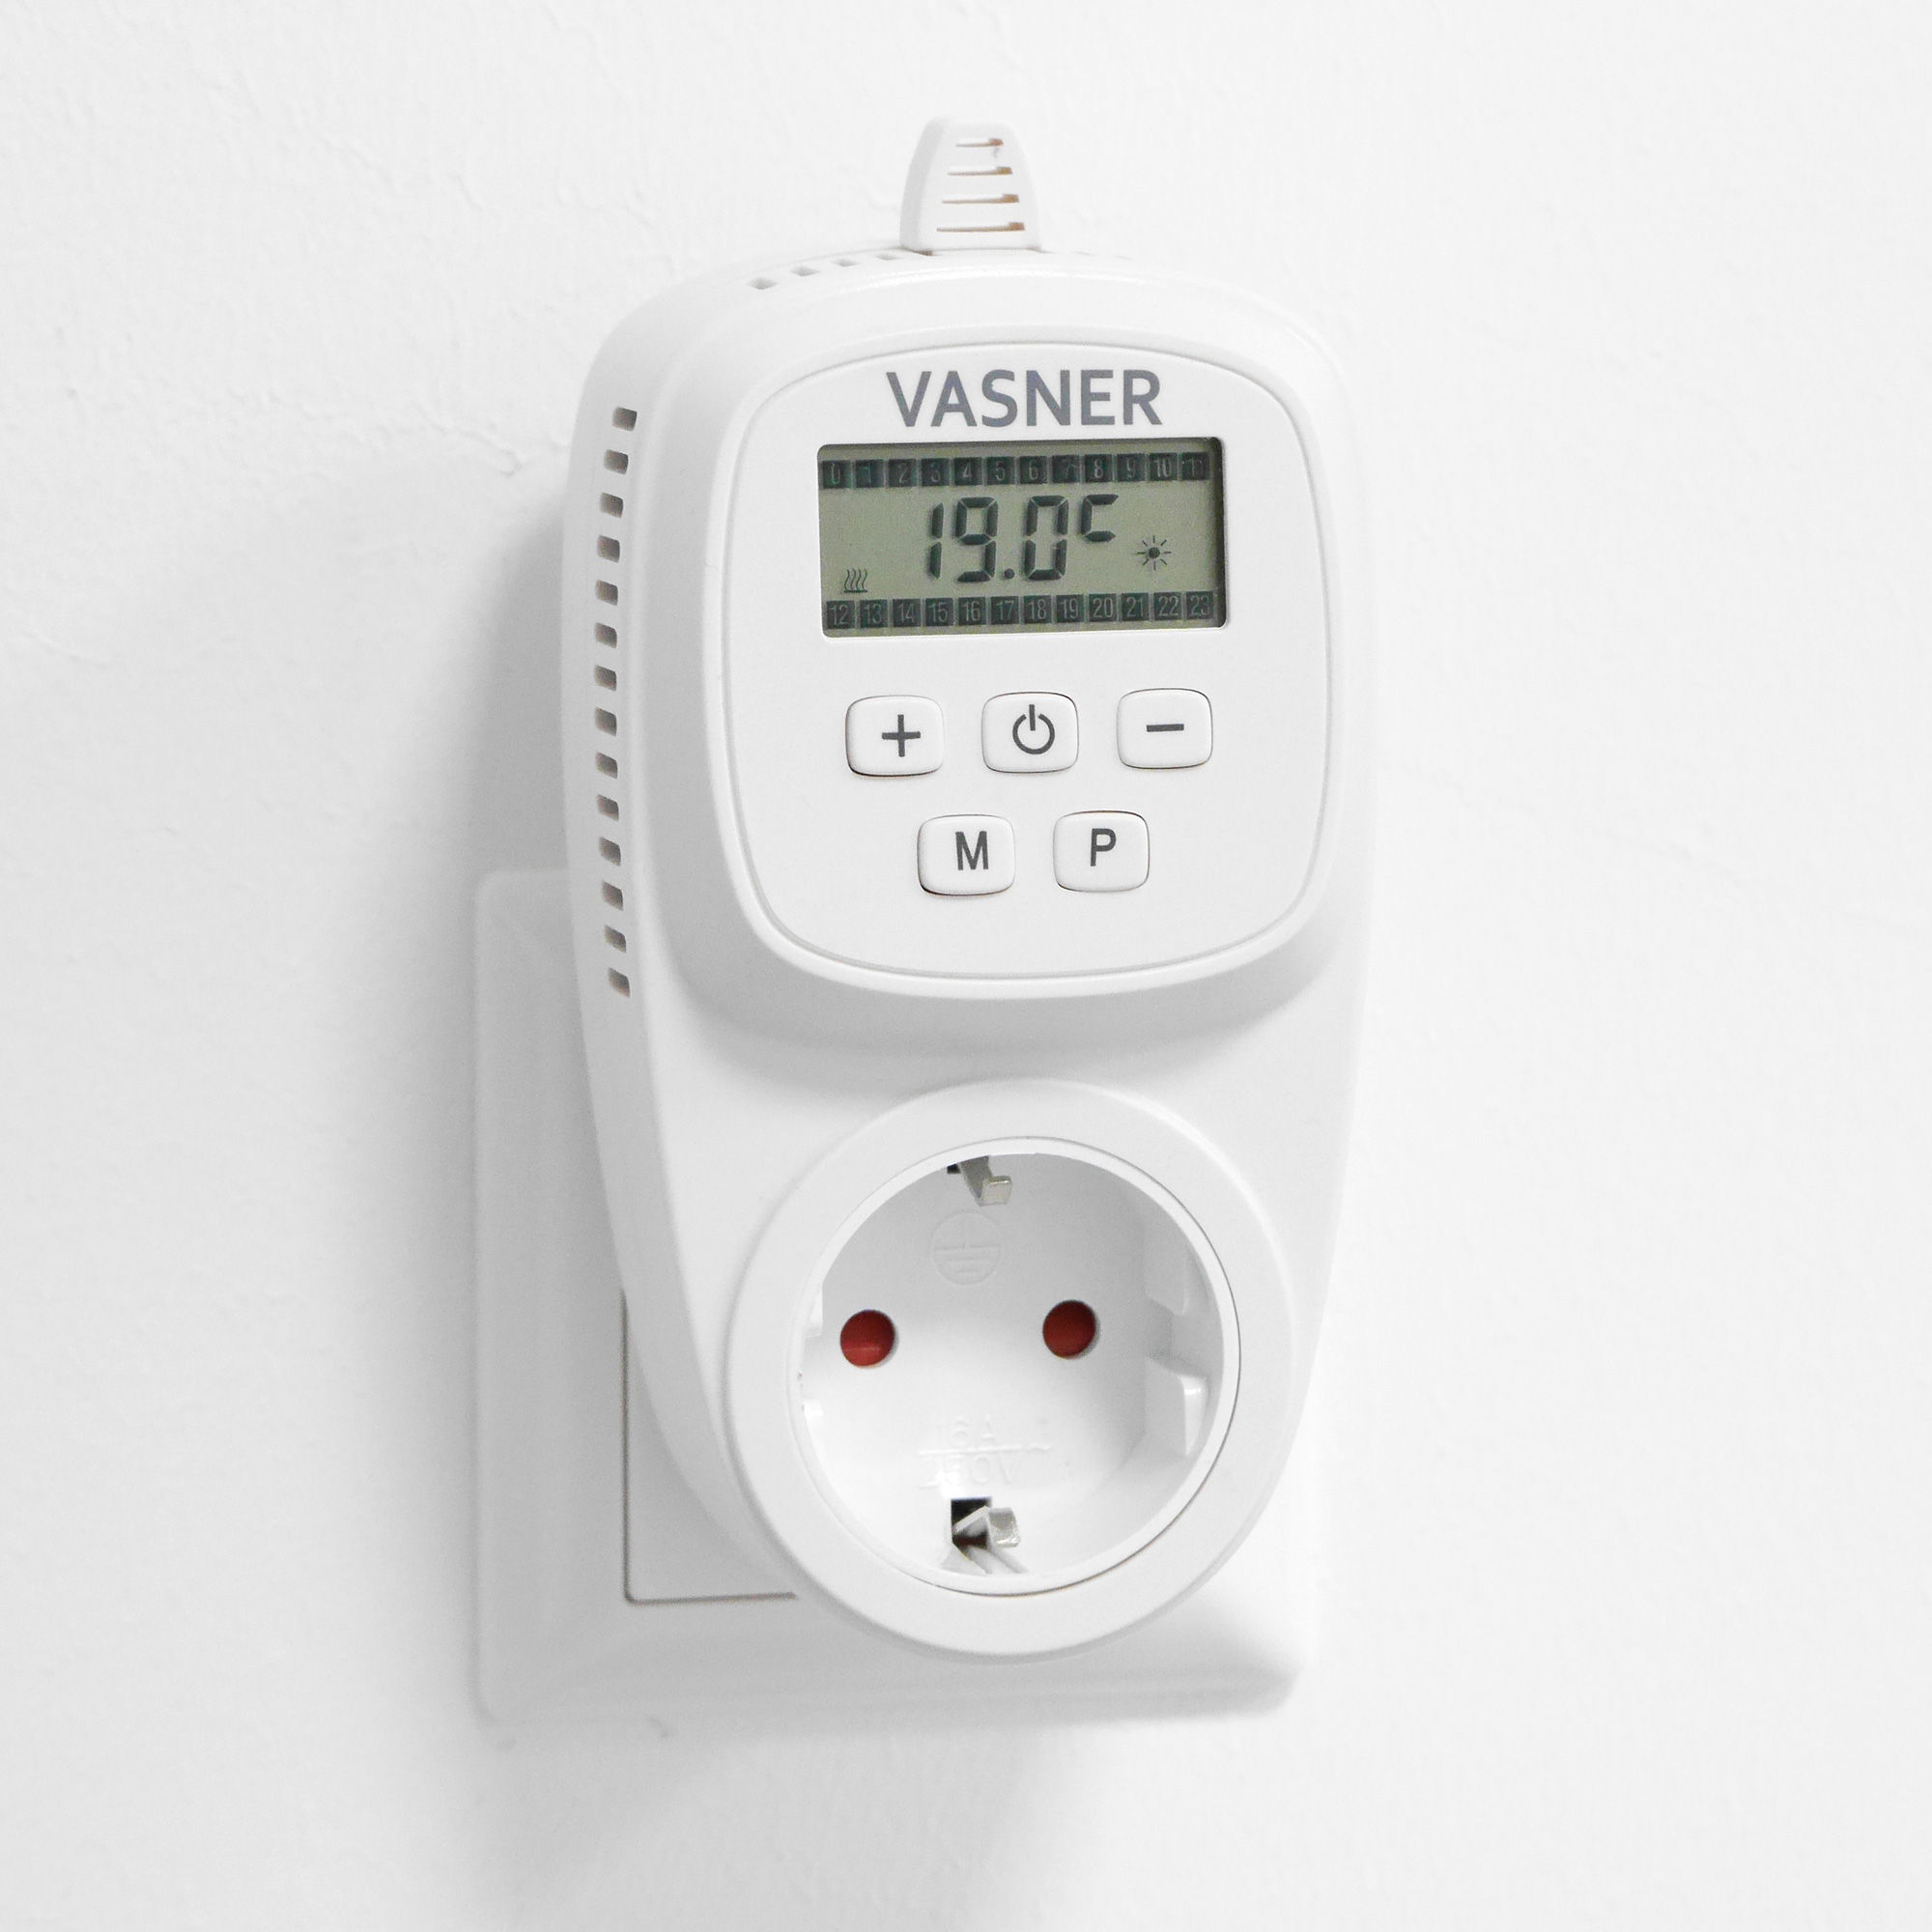 VASNER VUT35 Plug-In Thermostat